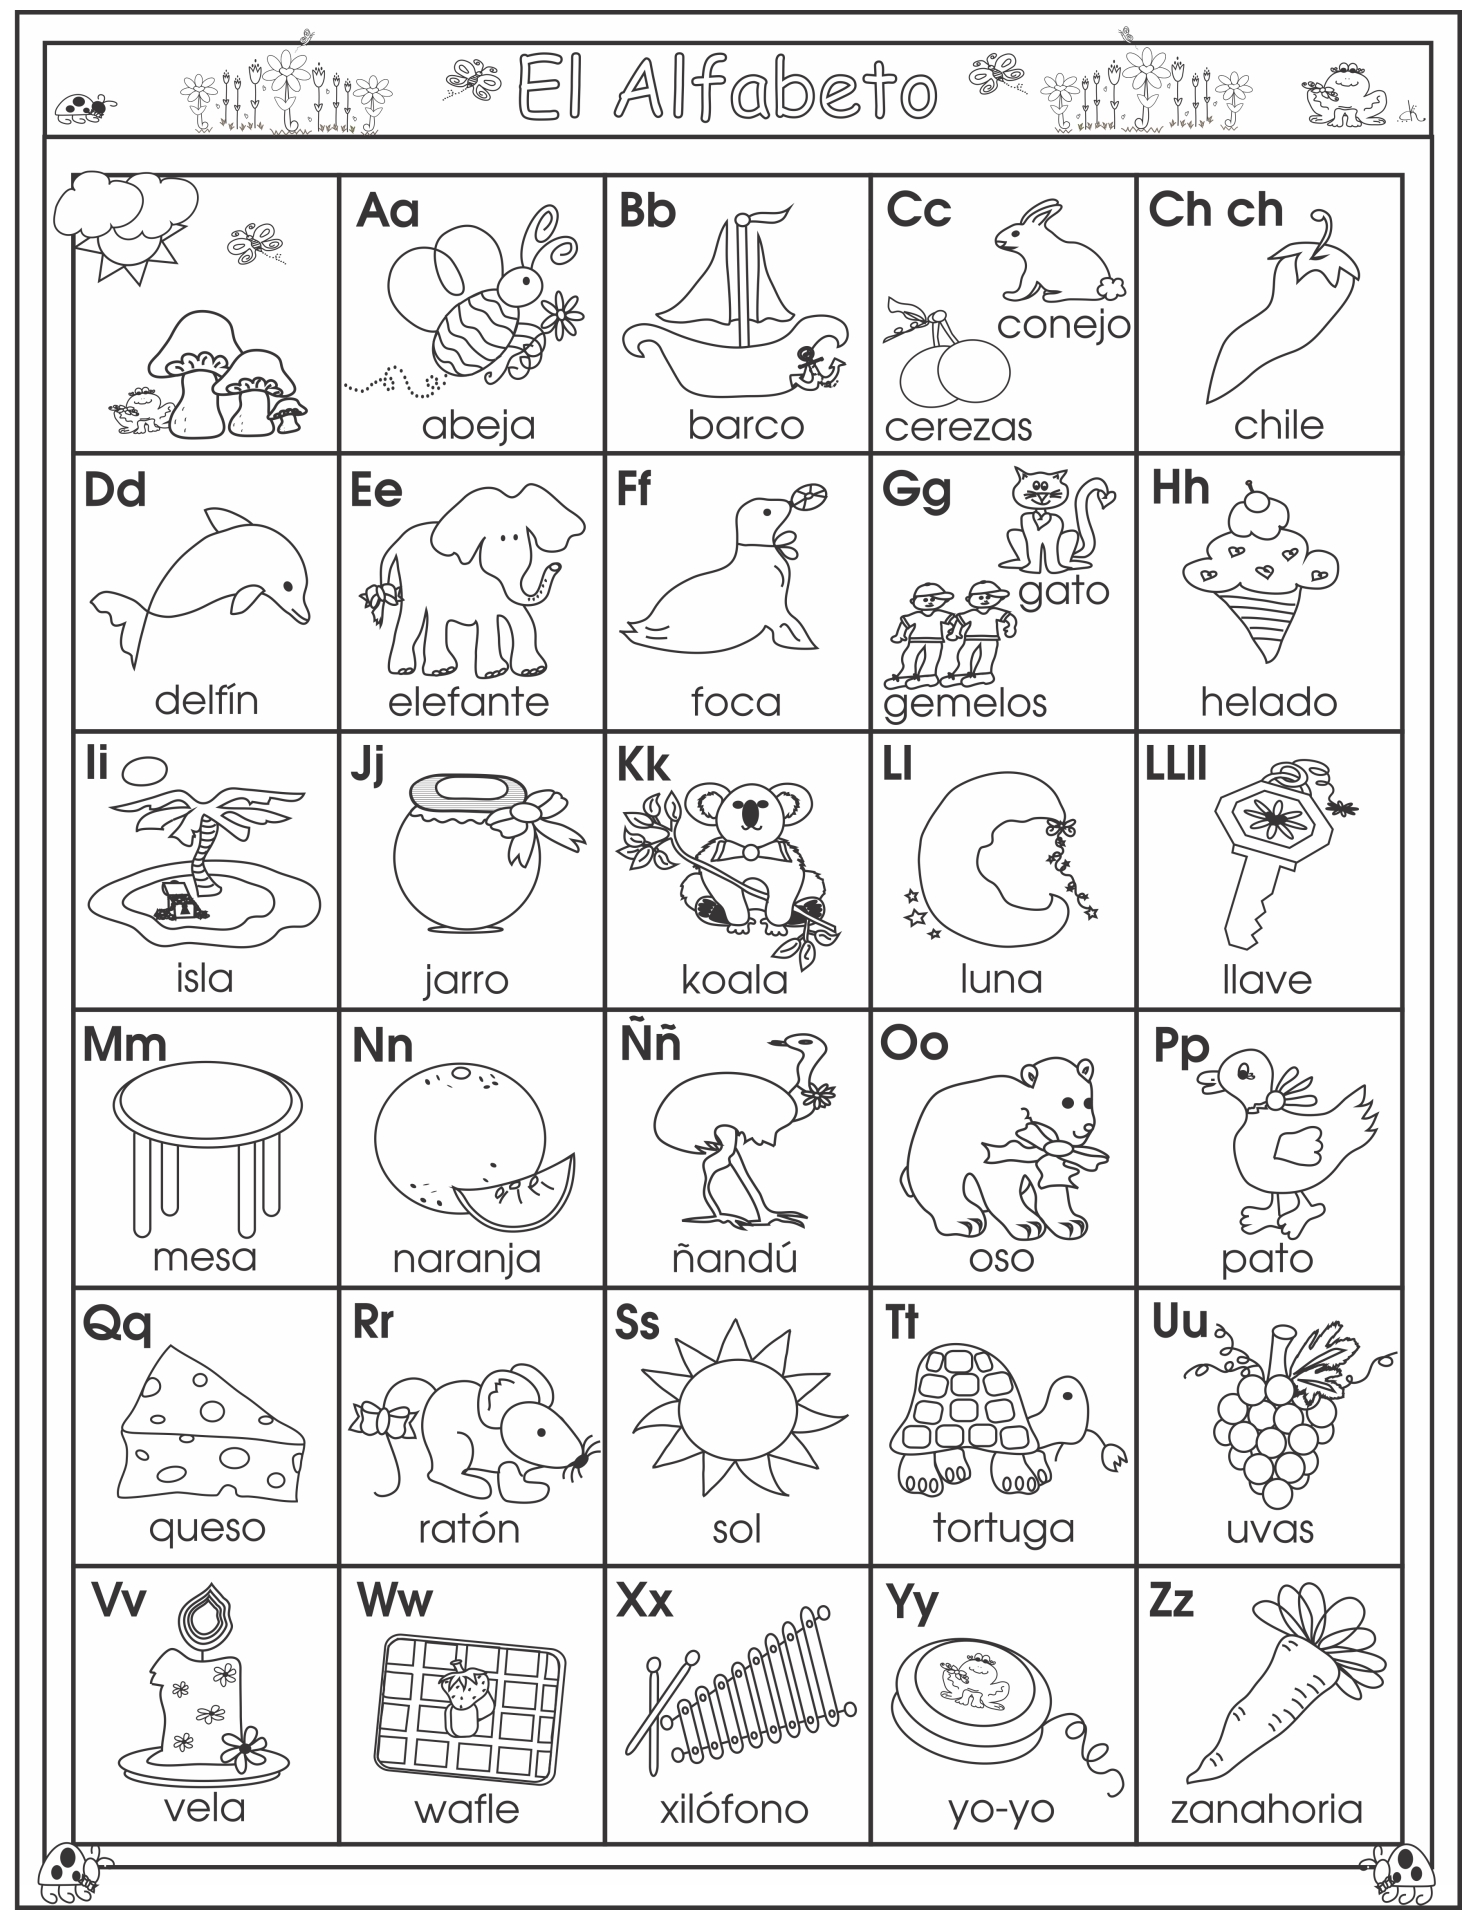 Spanish Alphabet Worksheets For High School